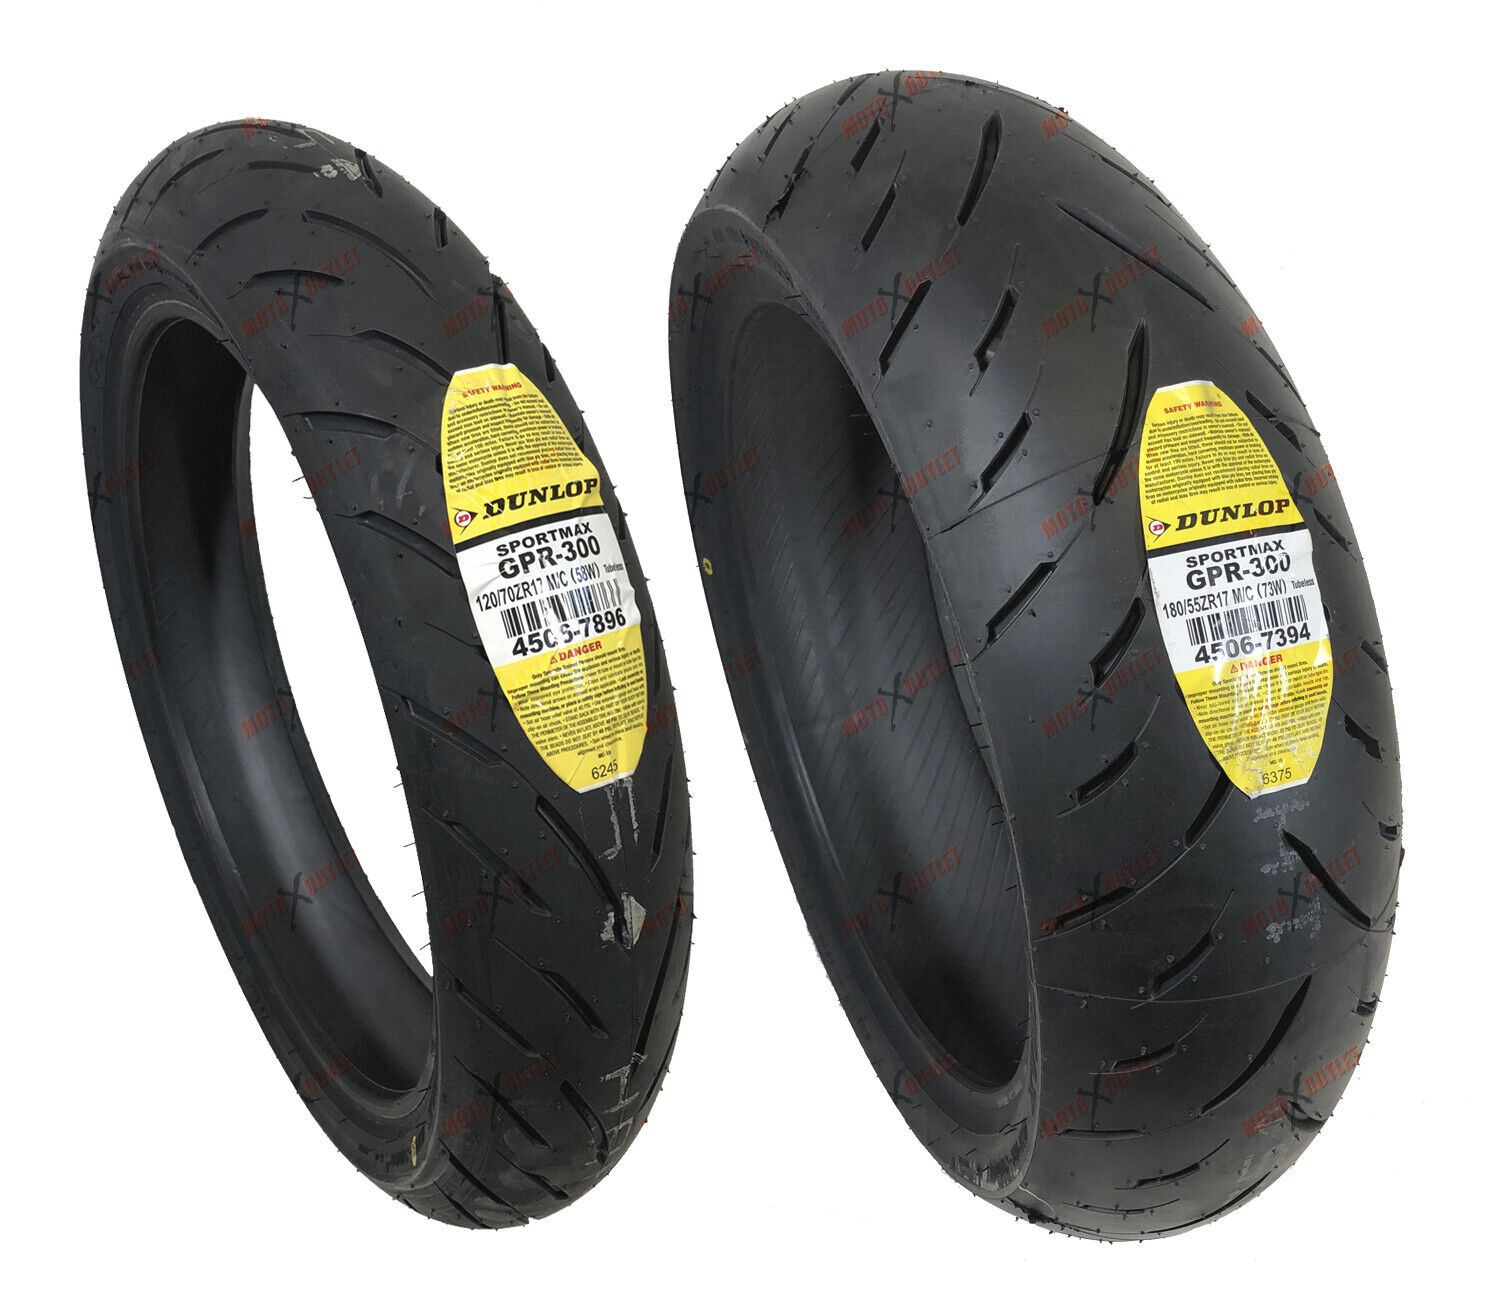 Dunlop Sportmax 120/70ZR17 180/55ZR17 GPR 300 Front Rear Motorcycle Tires 